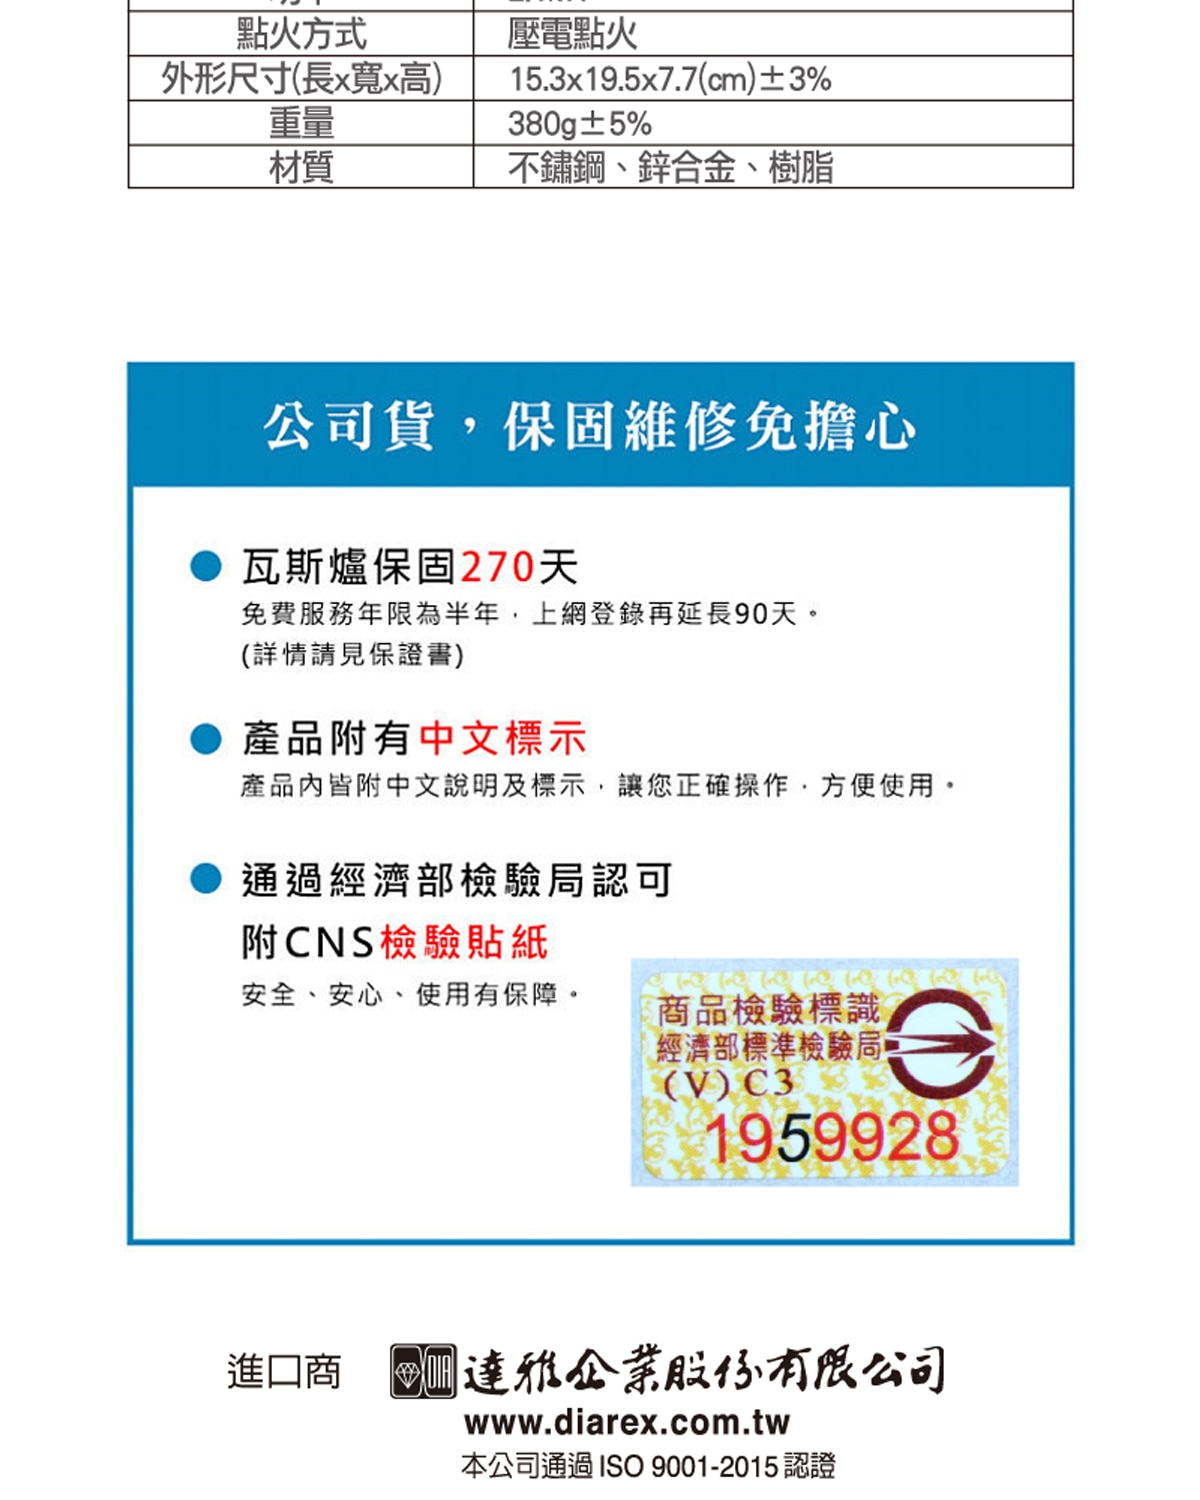 SOTO薄型輕便休閒爐提供瓦斯爐270天保固,產品皆附有中文標示,通過經濟部檢驗局認可,附有CNS檢驗貼紙,使用更安心。